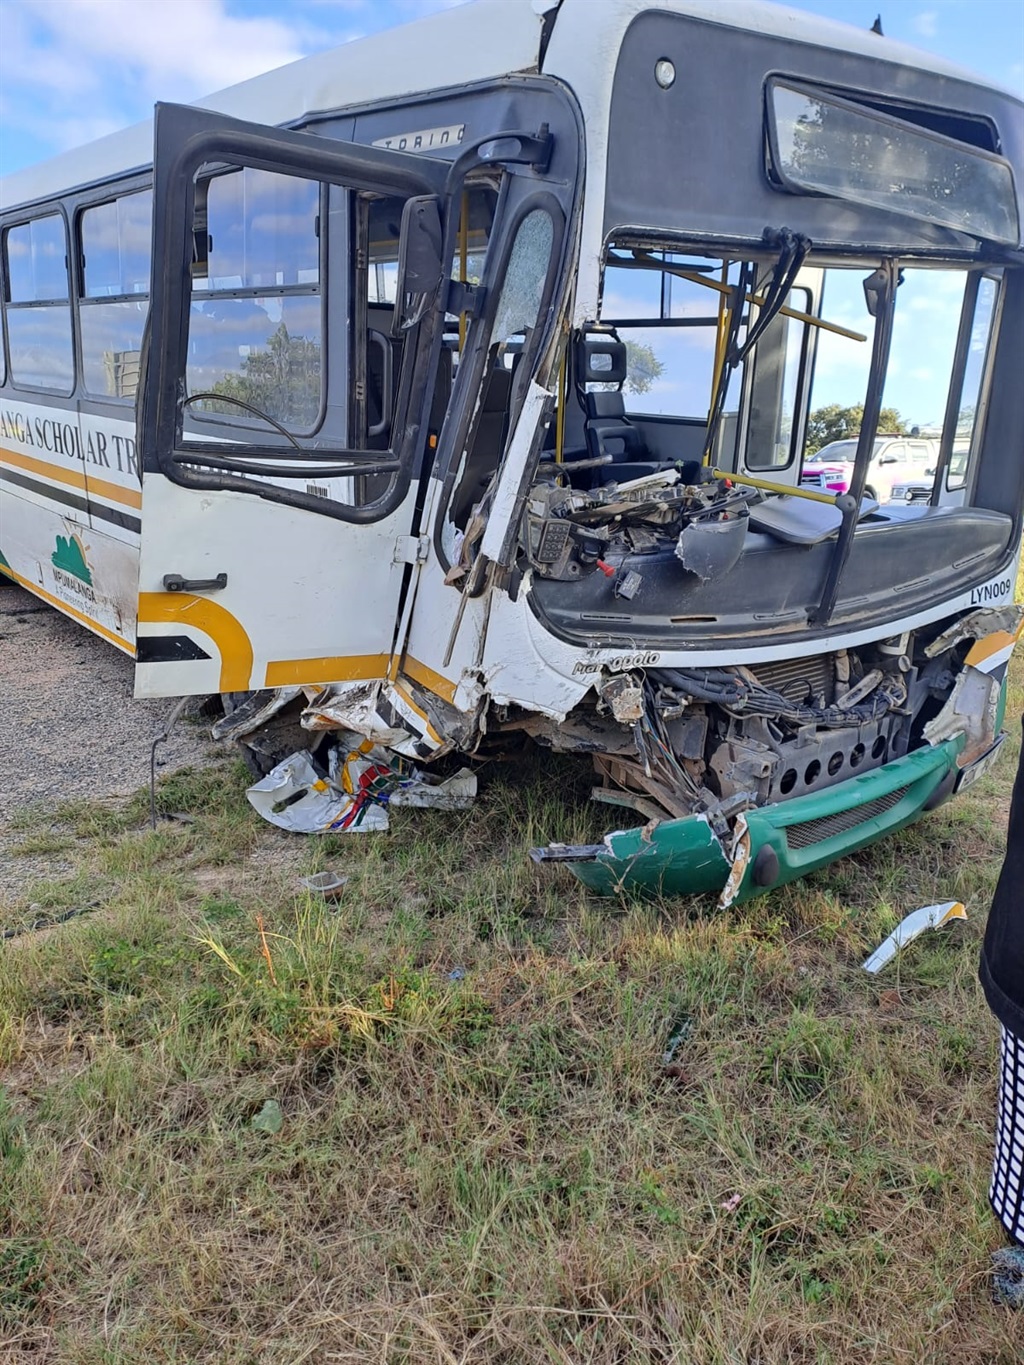 A damaged Mpumalanga scholar transport bus. Photo by Oris Mnisi